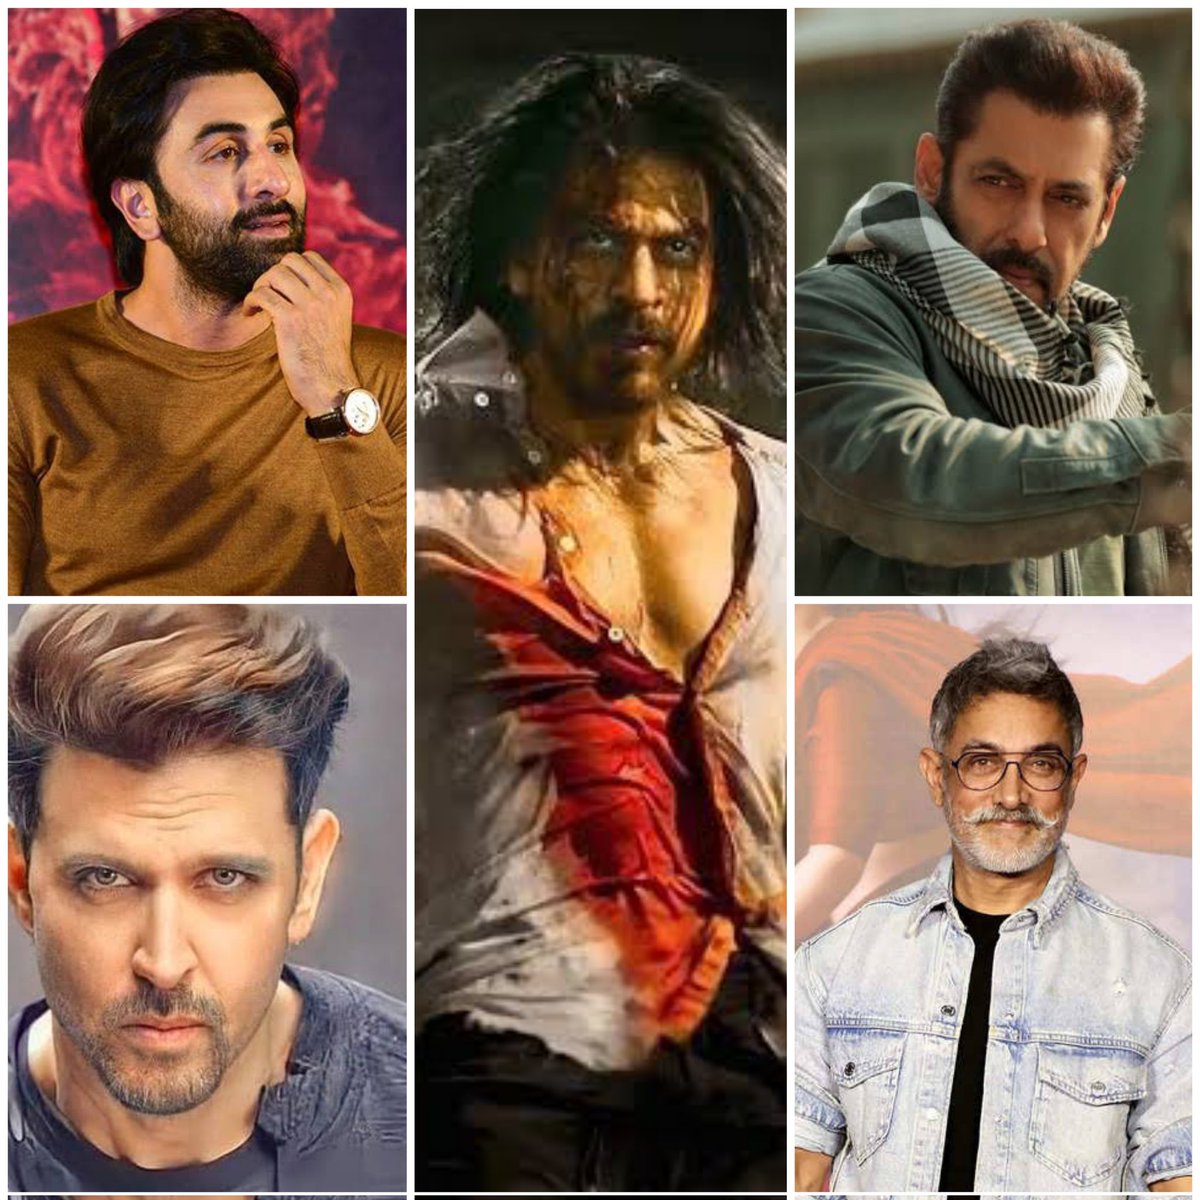 Biggest Opening Pull in Bollywood :-

1. #SRK 
2. #HrithikRoshan 
3. #Ajaydevgn
4. #AamirKhan 
5. #RanveerSingh
6. #AliaBhatt
7. #RanbirKapoor
8. #SalmanKhan 
9. #AkshayKumar 

Source - BOI